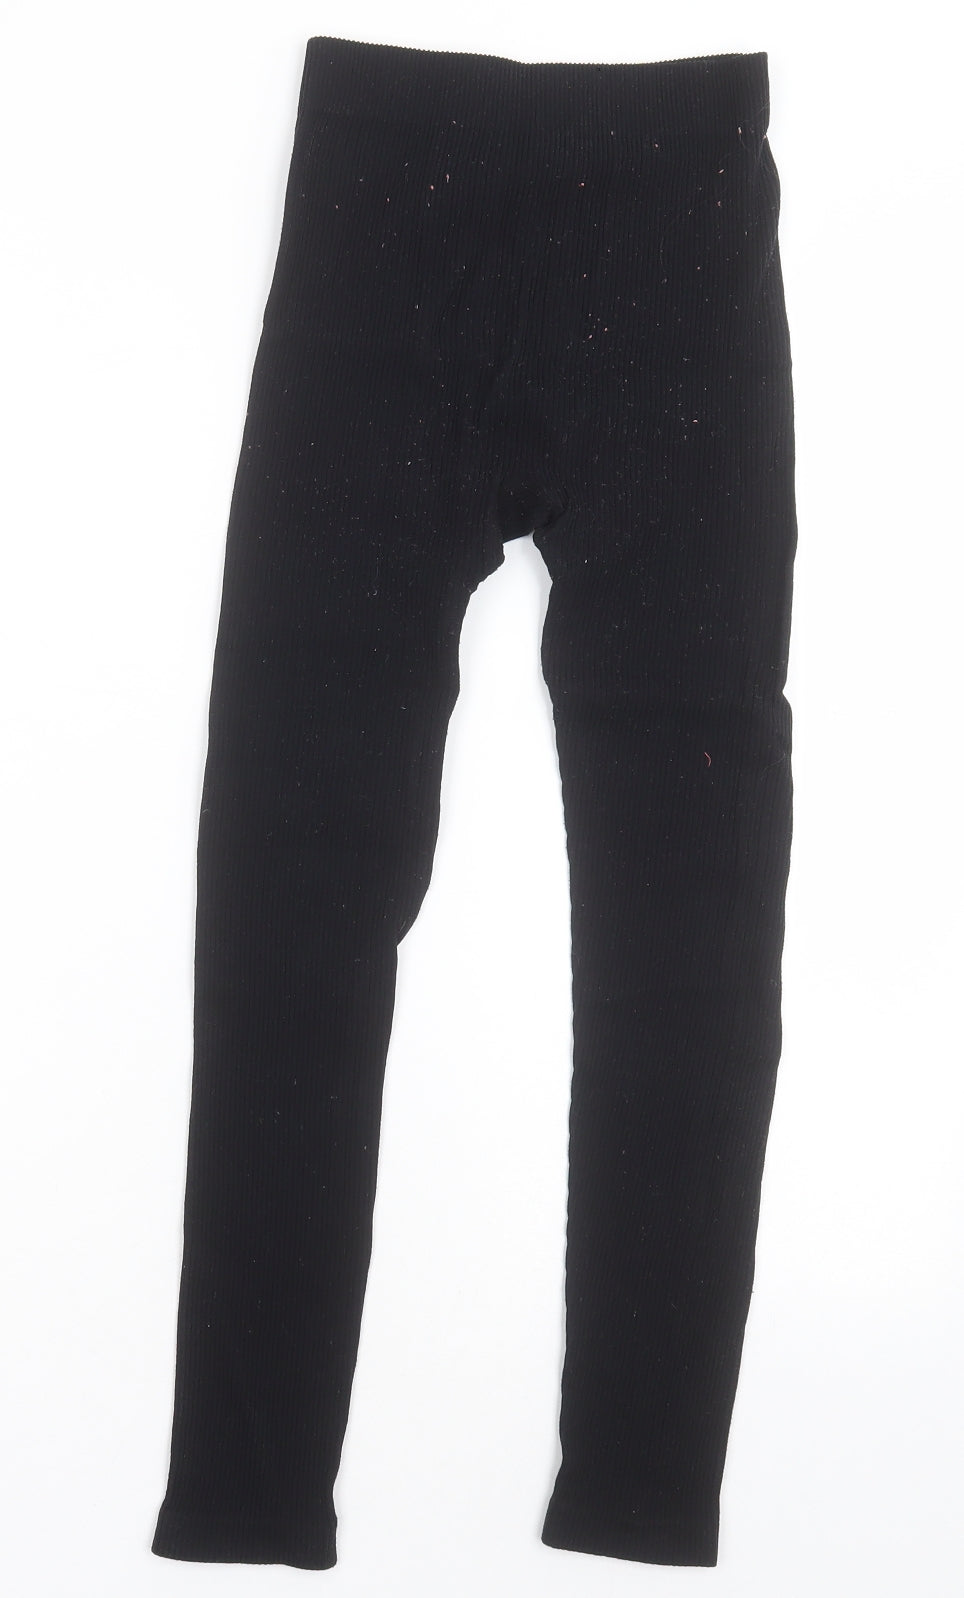 Dunnes Stores Womens Black Nylon Capri Leggings Size 6 L26 in - ribbed  fabric